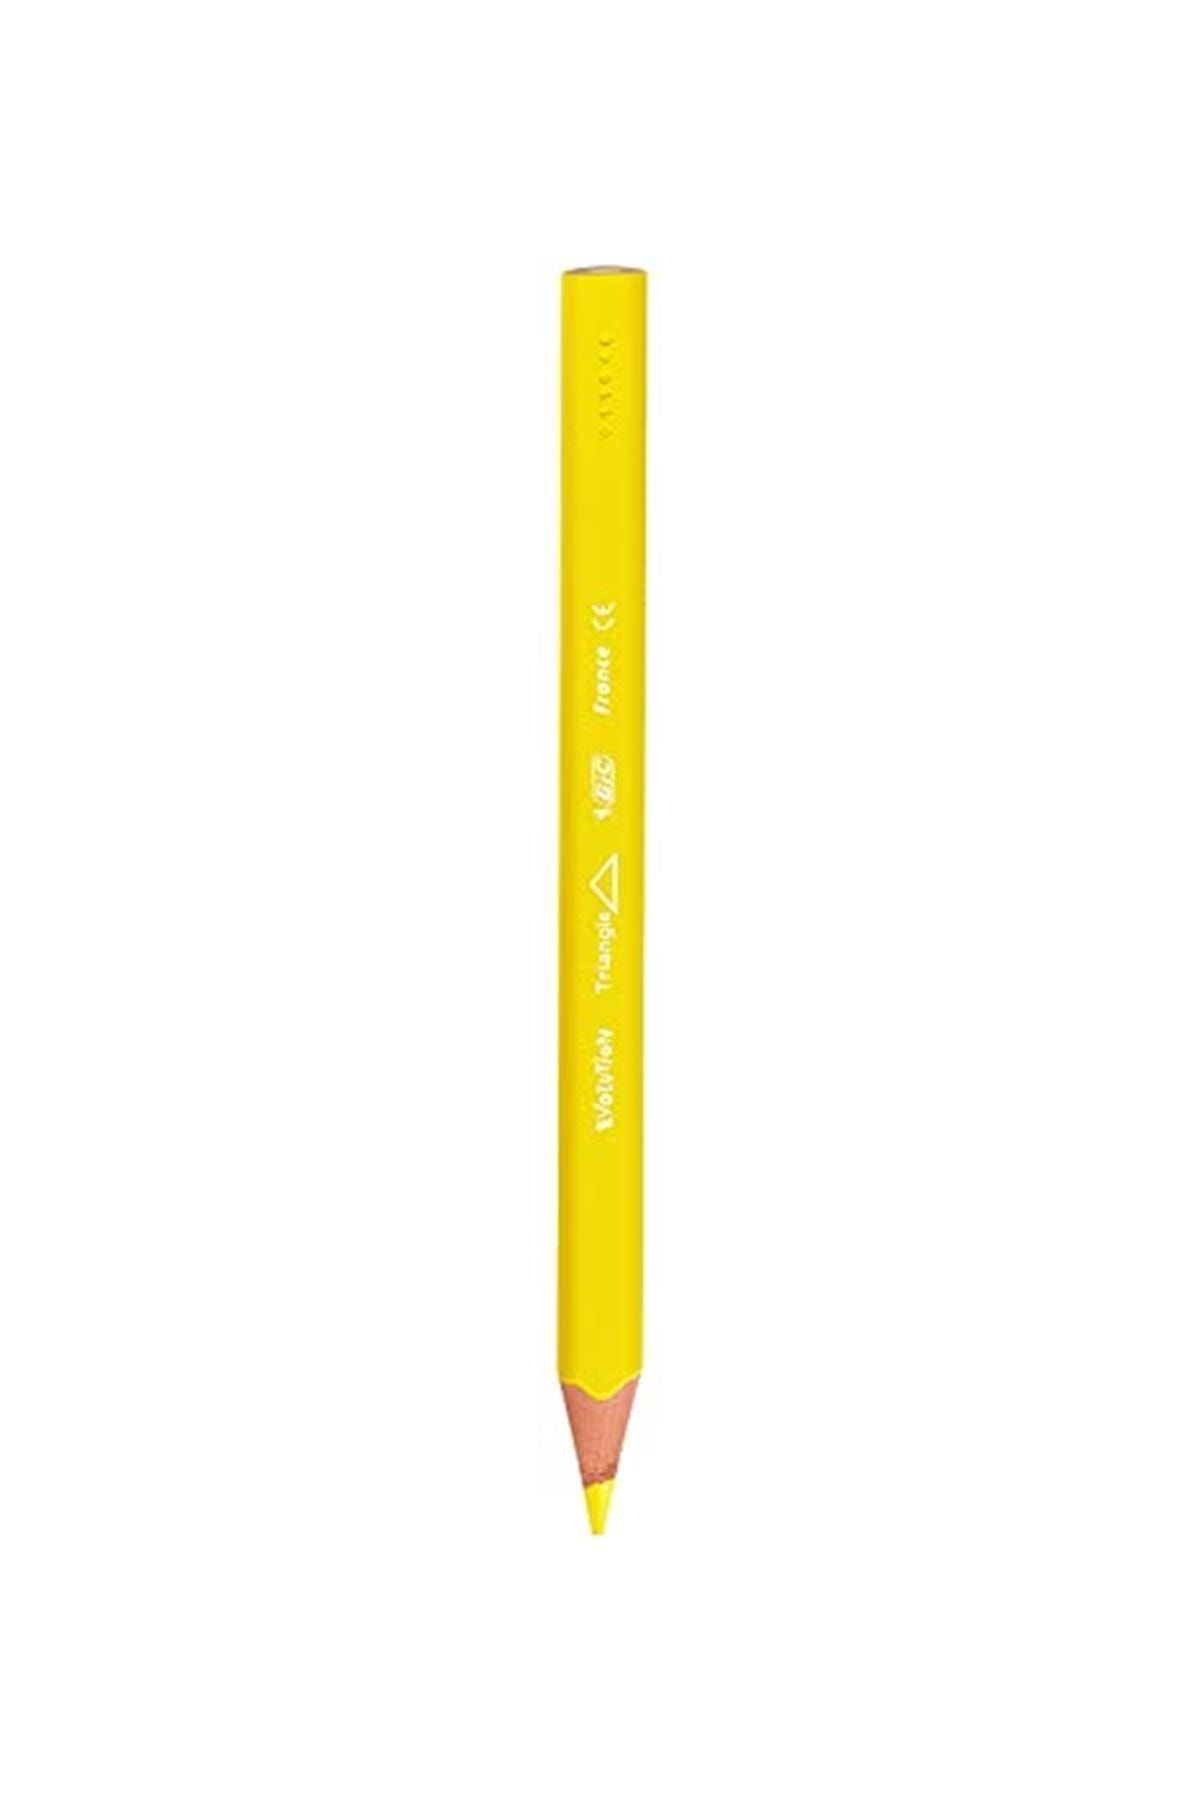 EVOLUTION TRIANGLE Colouring pencils Bic Kids